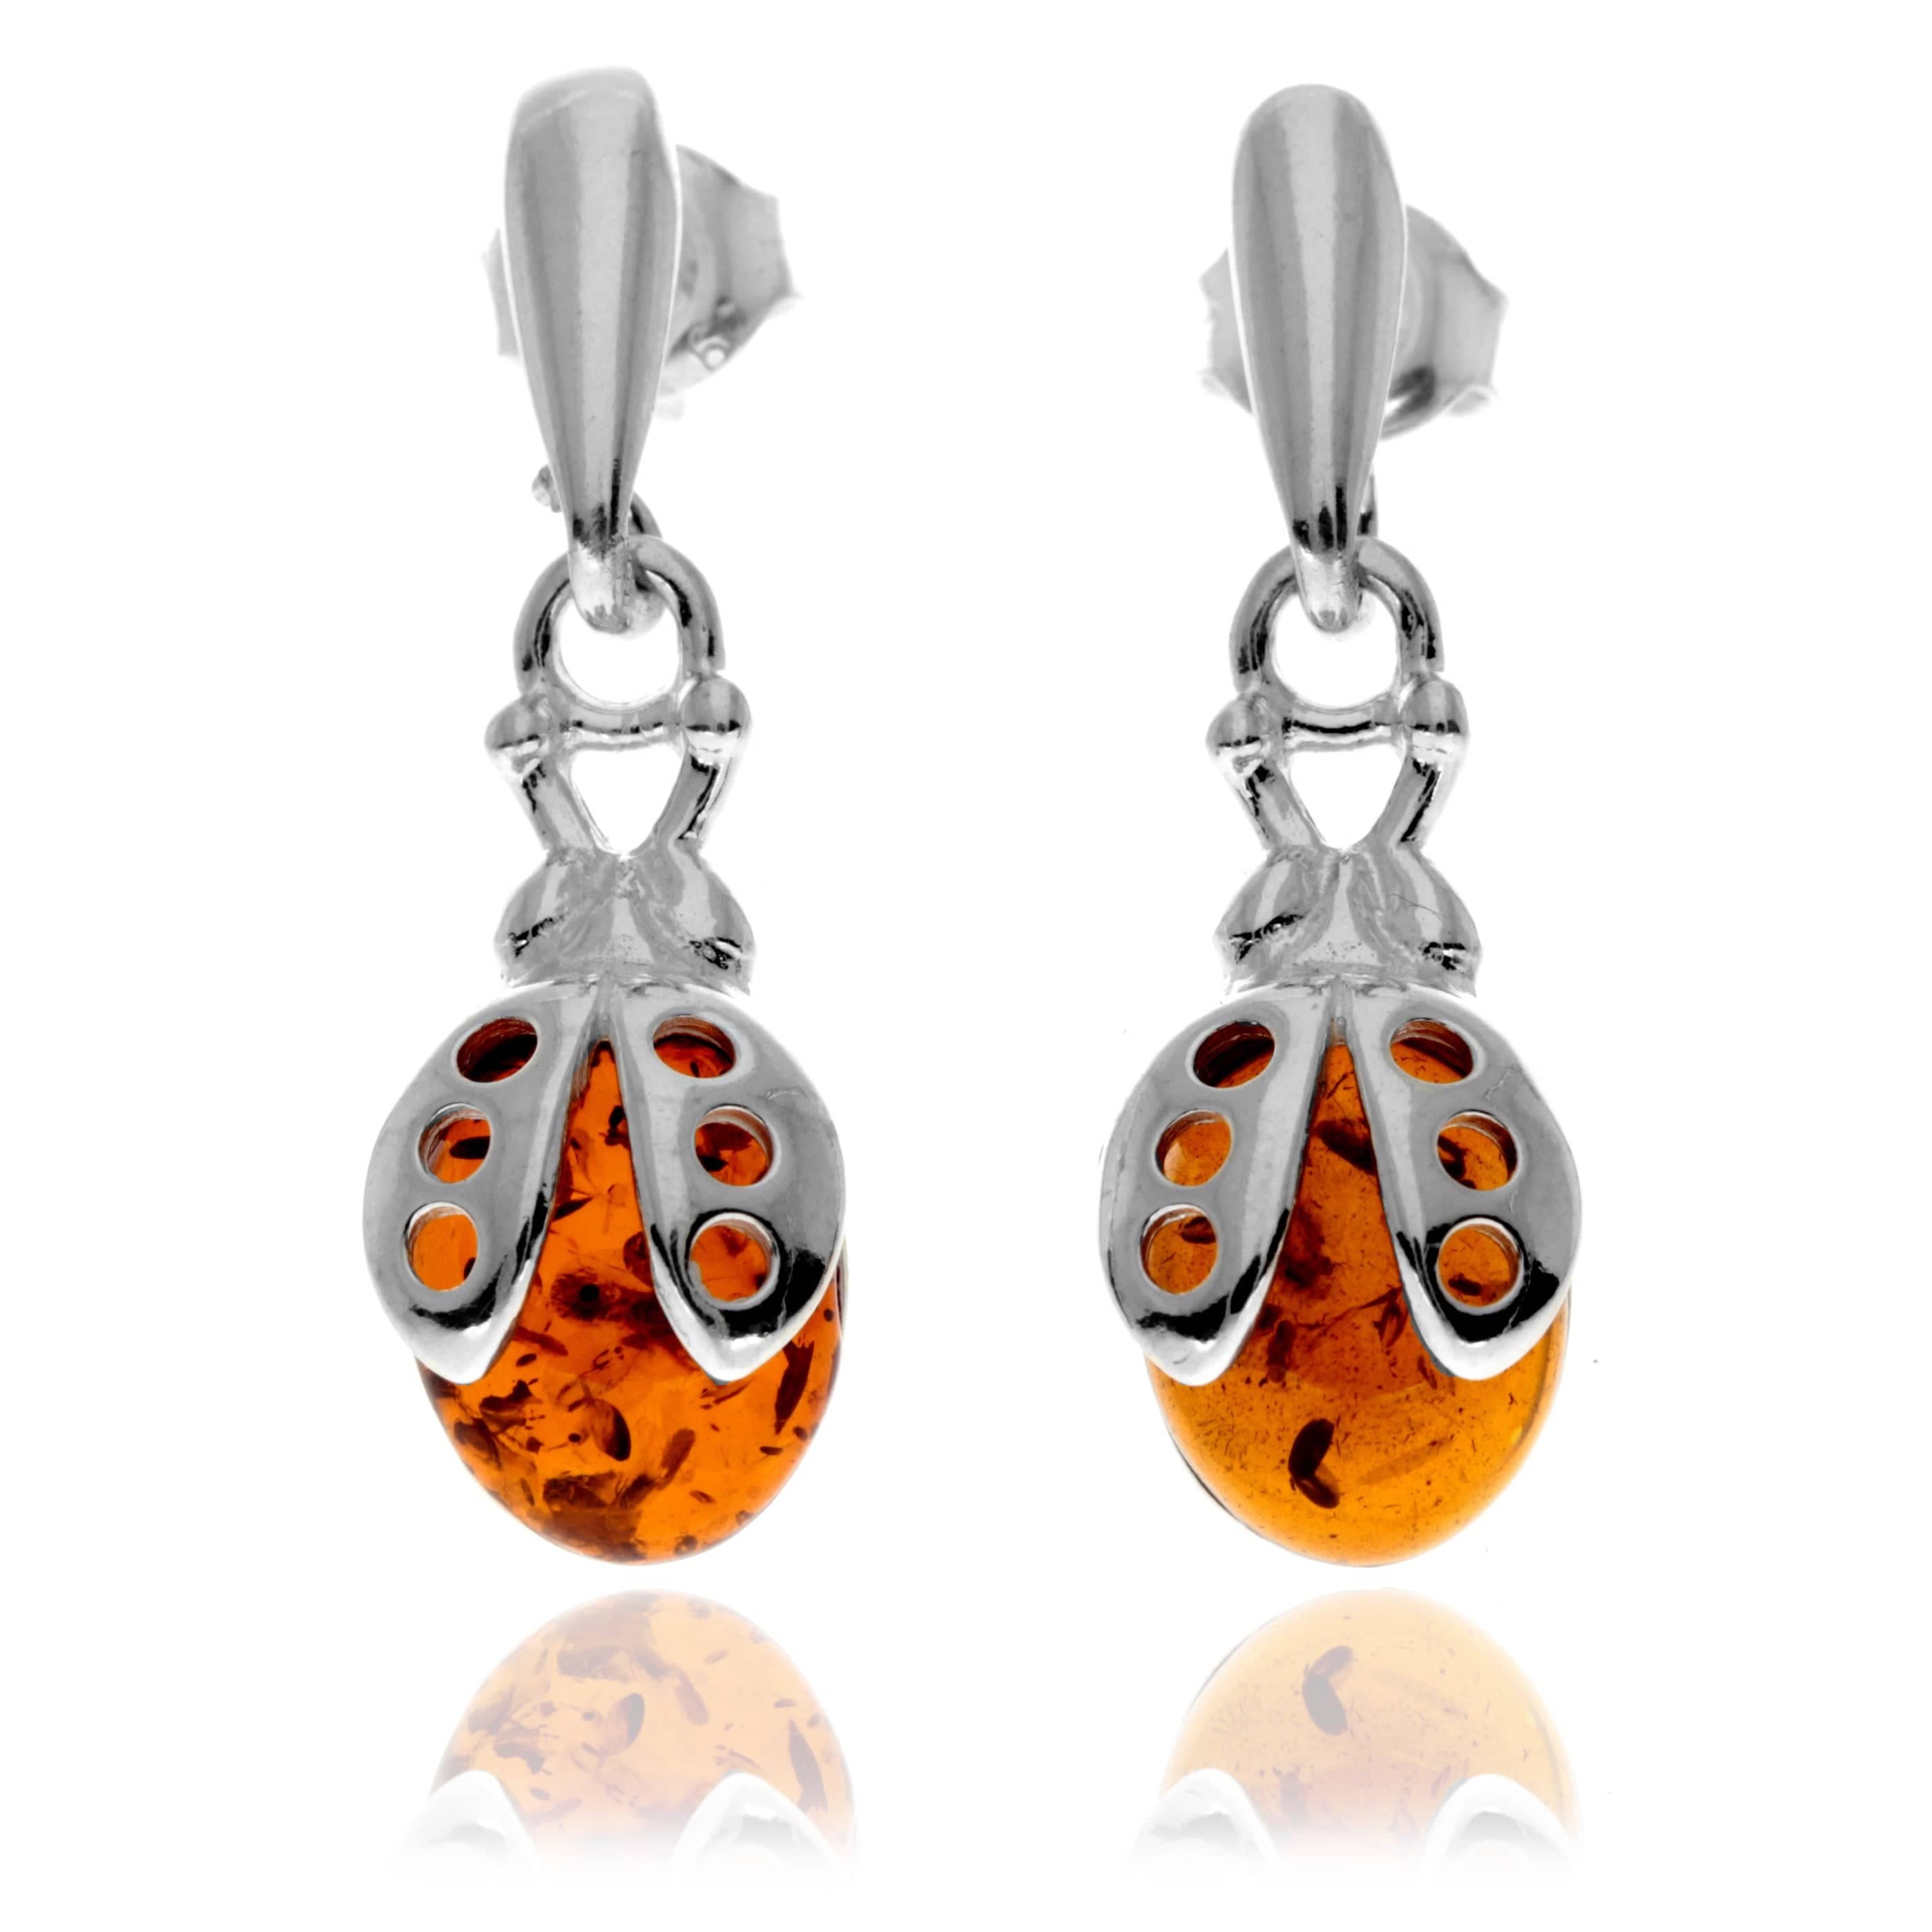 925 Sterling Silver & Genuine Baltic Amber Ladybird Drop Earrings - GL1000D